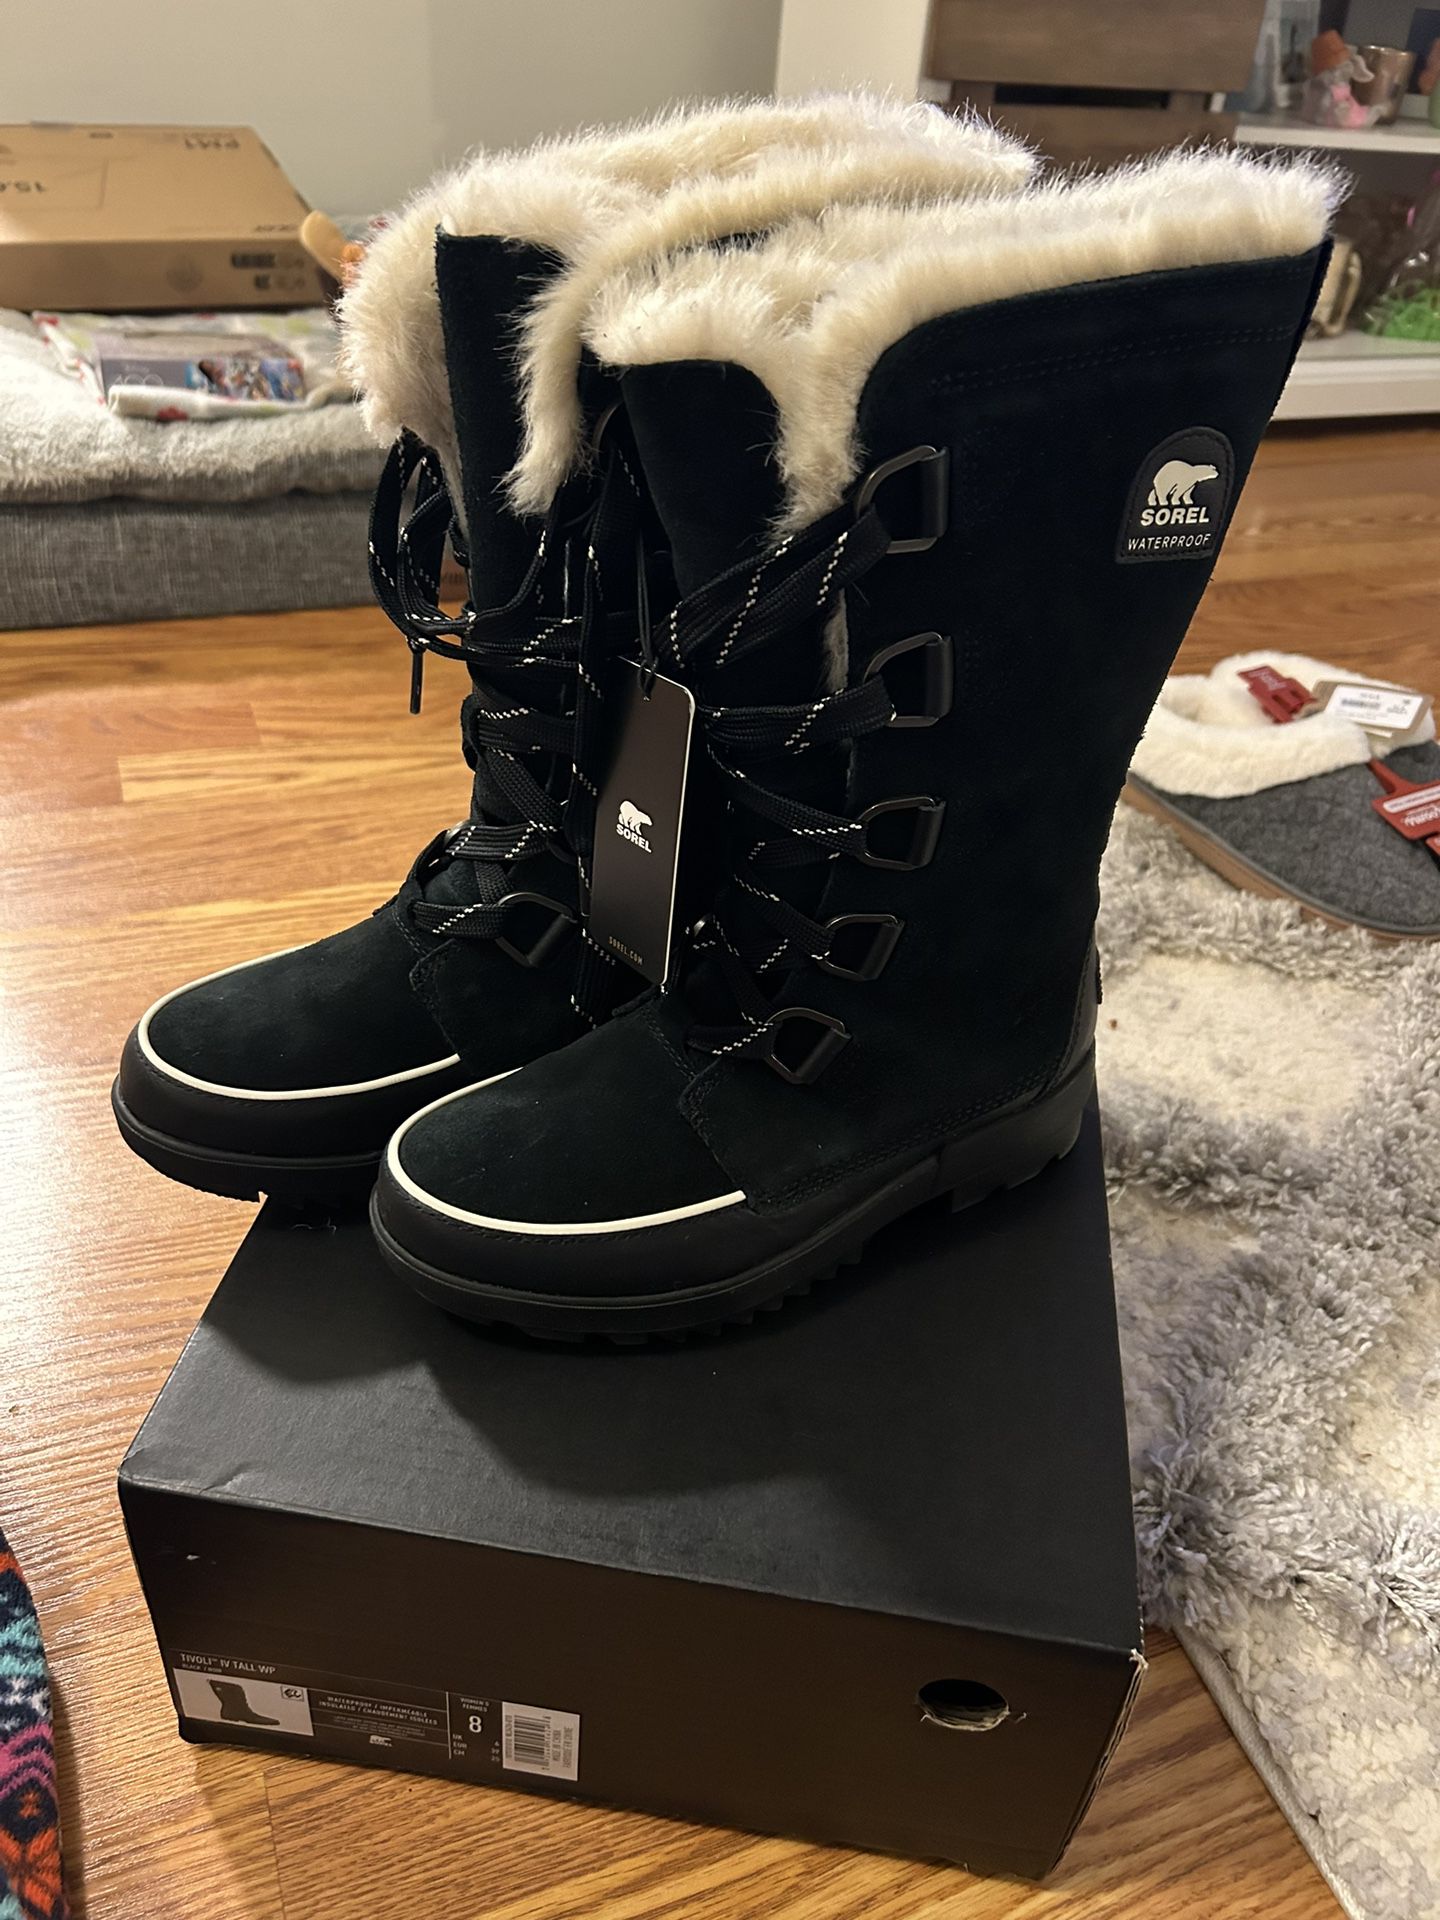 Brand New Women’s Sorel Boots Size 8